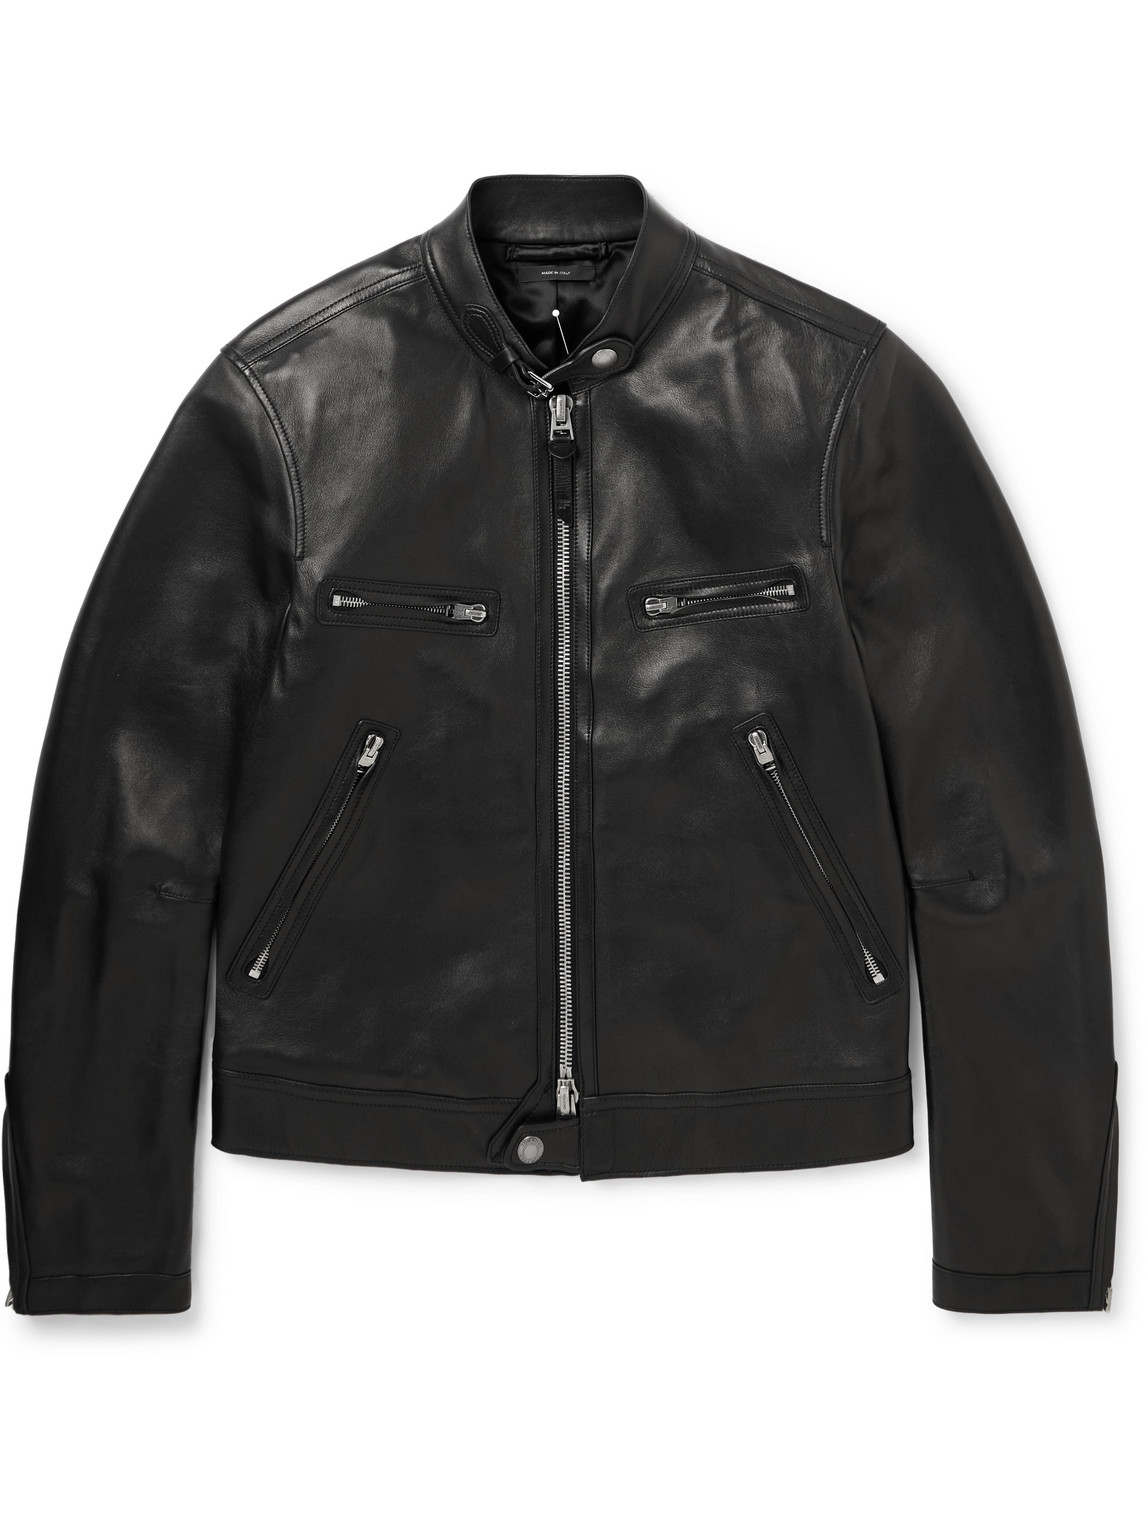 Tom Ford Black Zip Leather Jacket